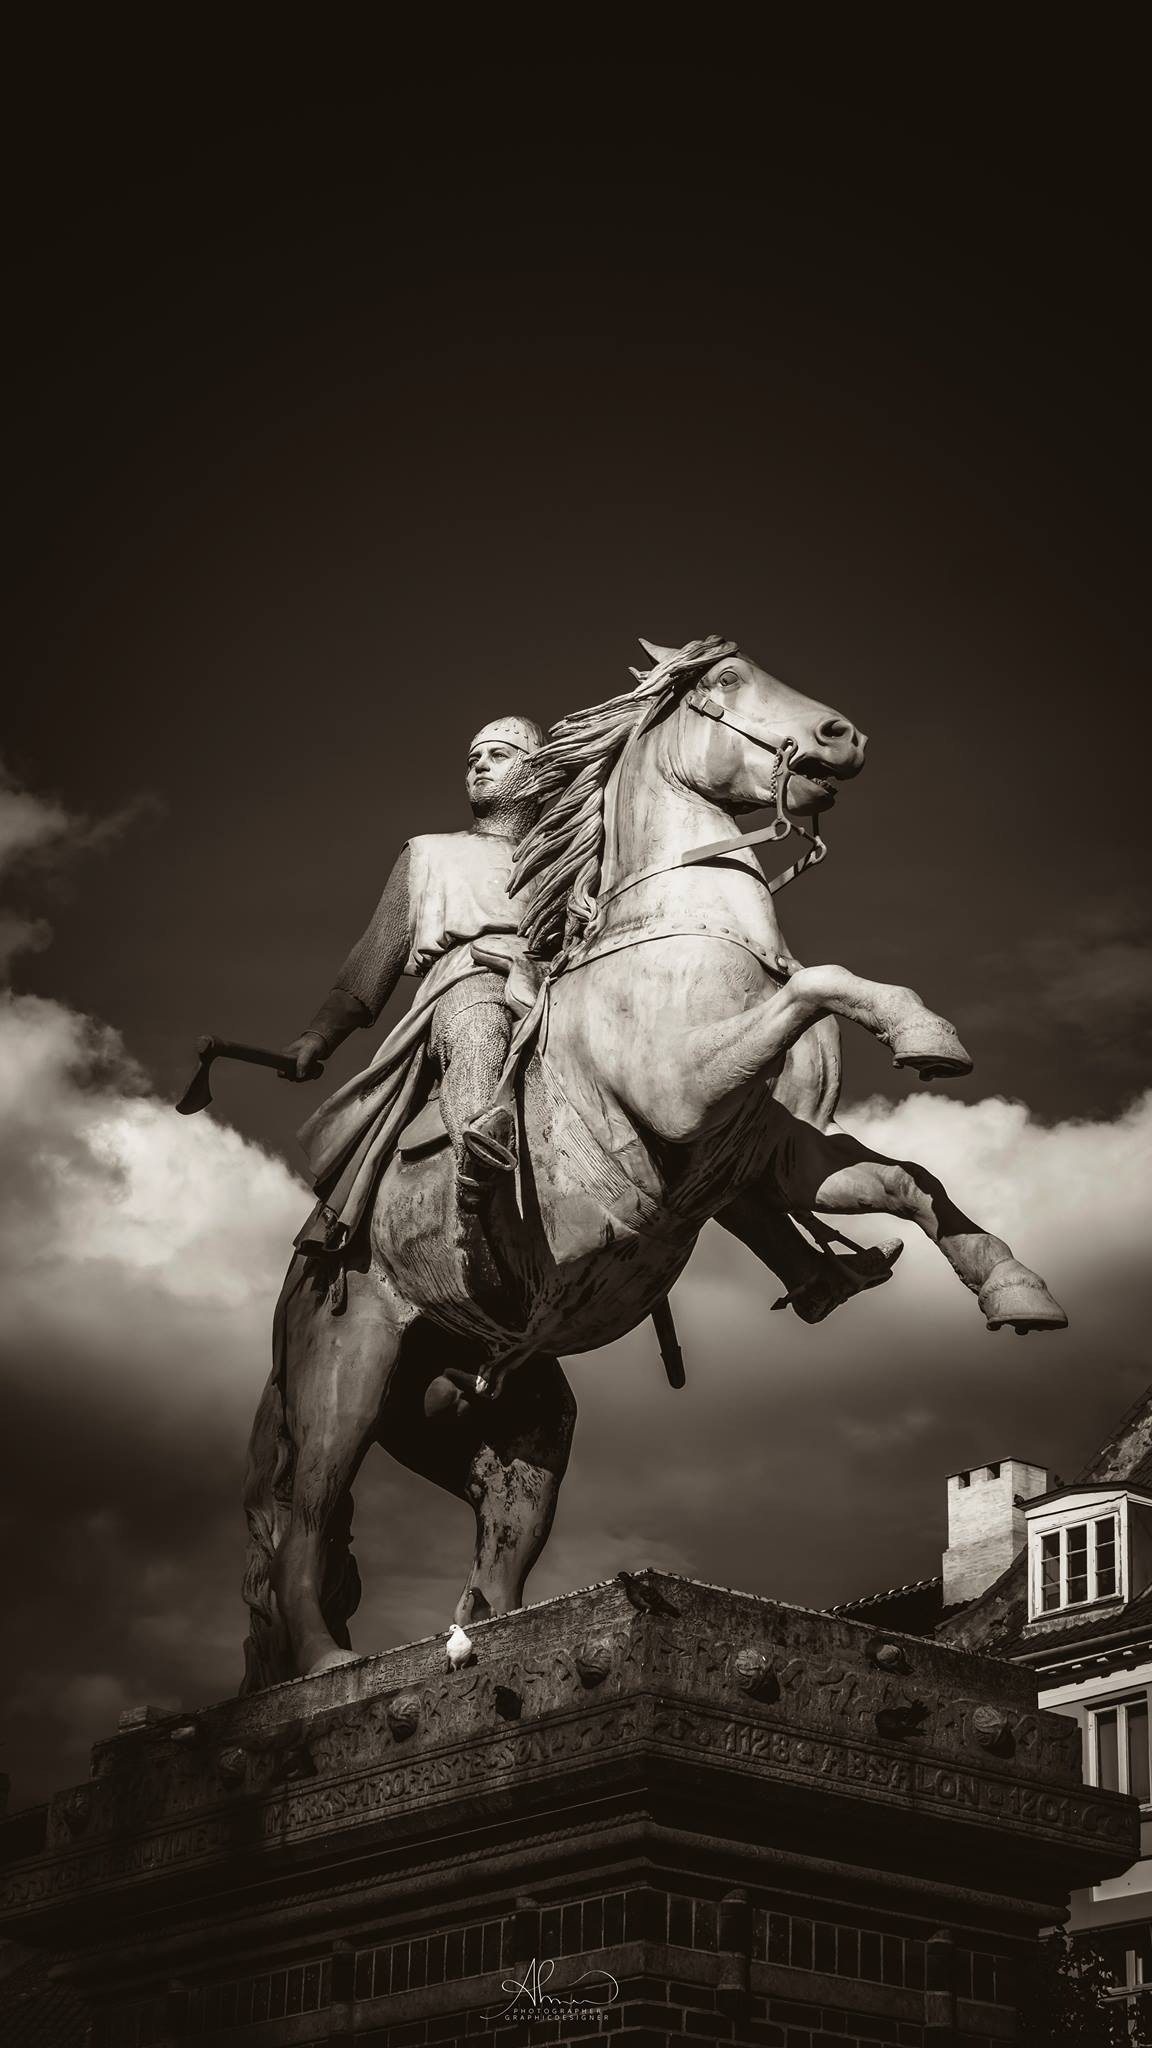 Man holding axe rides on horse concrete statue photo